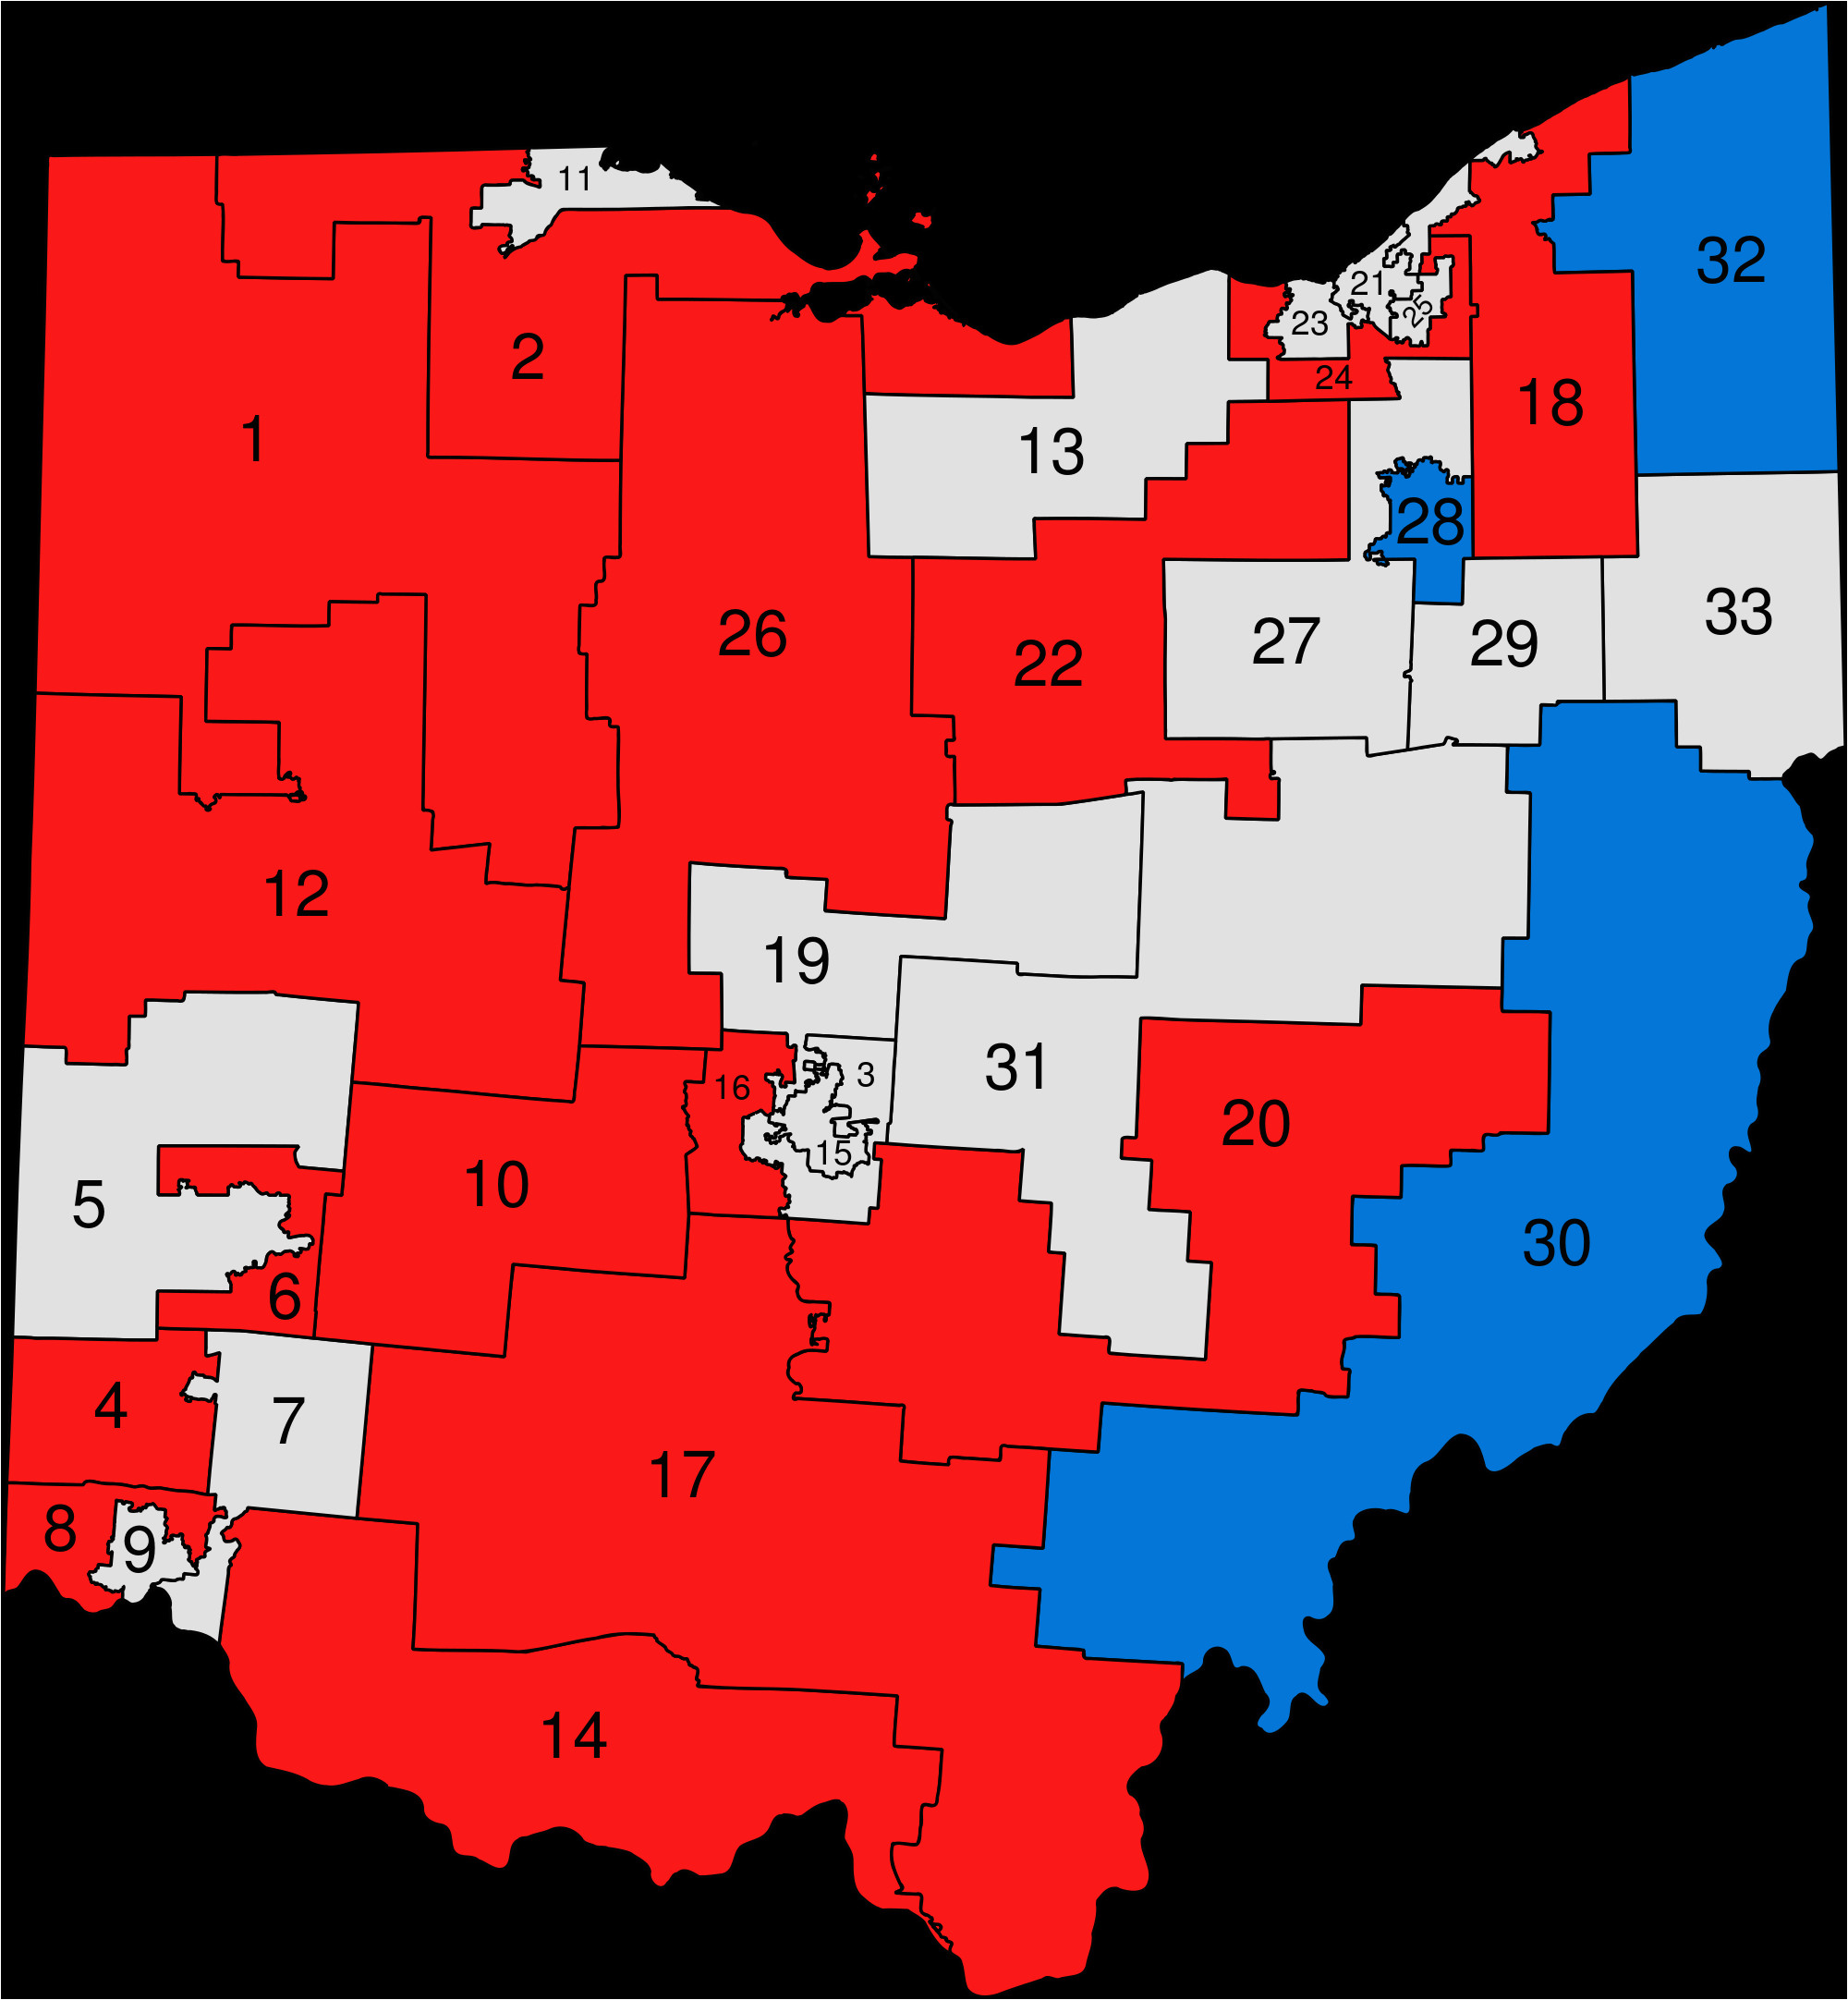 Ohio Senate Map File Ohio Senate 2012 Election Results Labeled Svg Wikimedia Commons